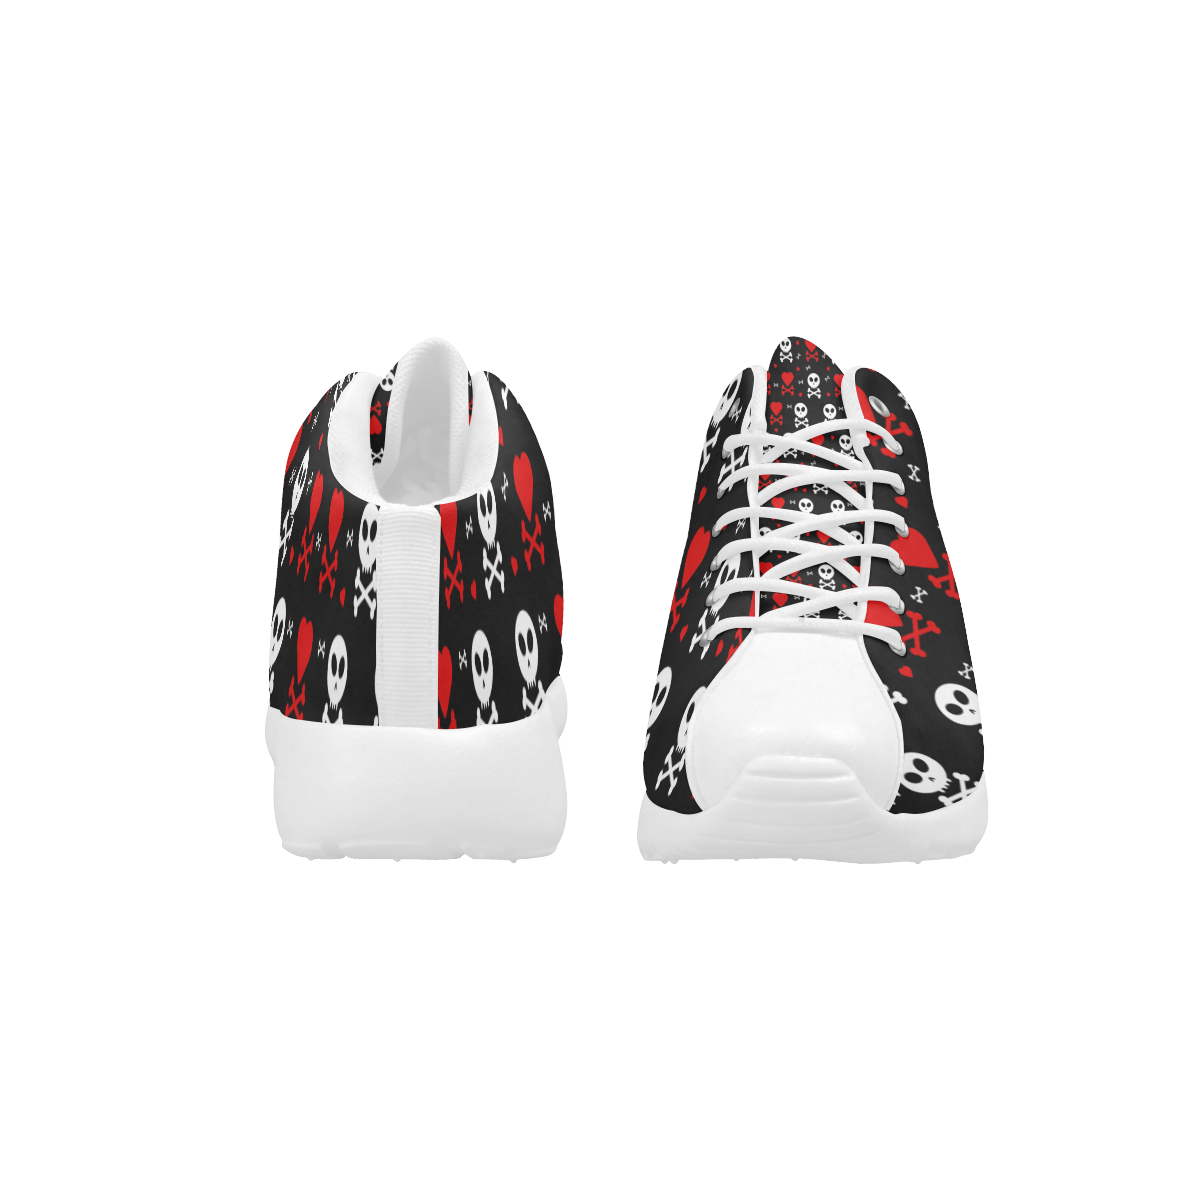 Skull Hearts Women's Basketball Training Shoes/Large Size (Model 47502)